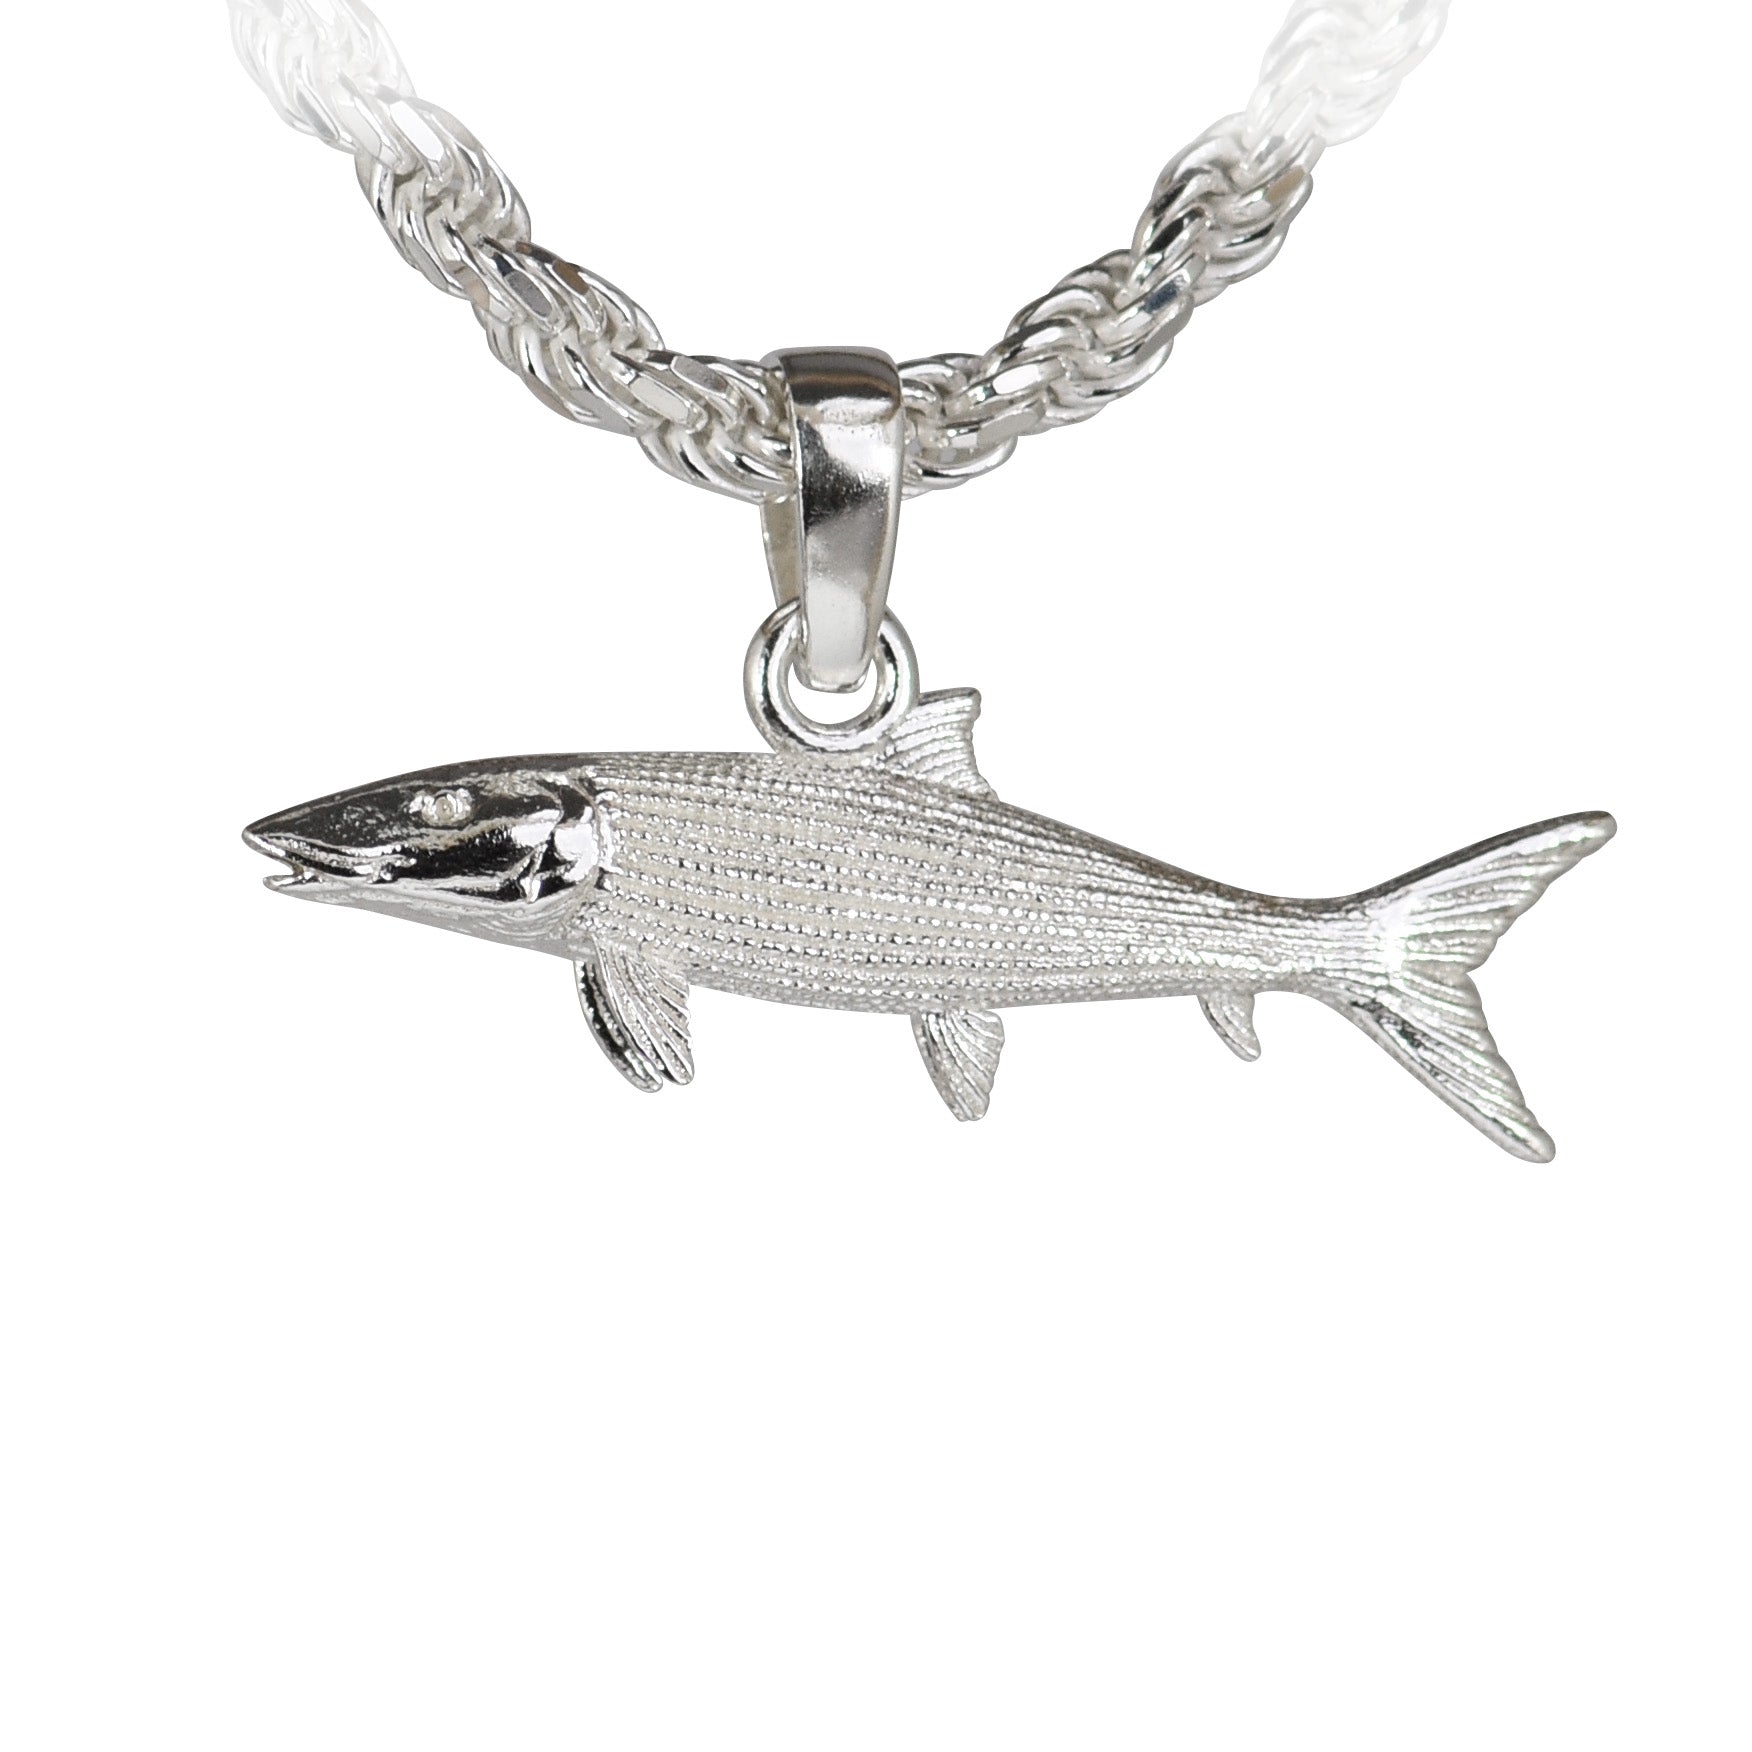 Tarpon Fish Pendant - Small Version | Sea Shur Jewelry 18K Yellow Gold Solid